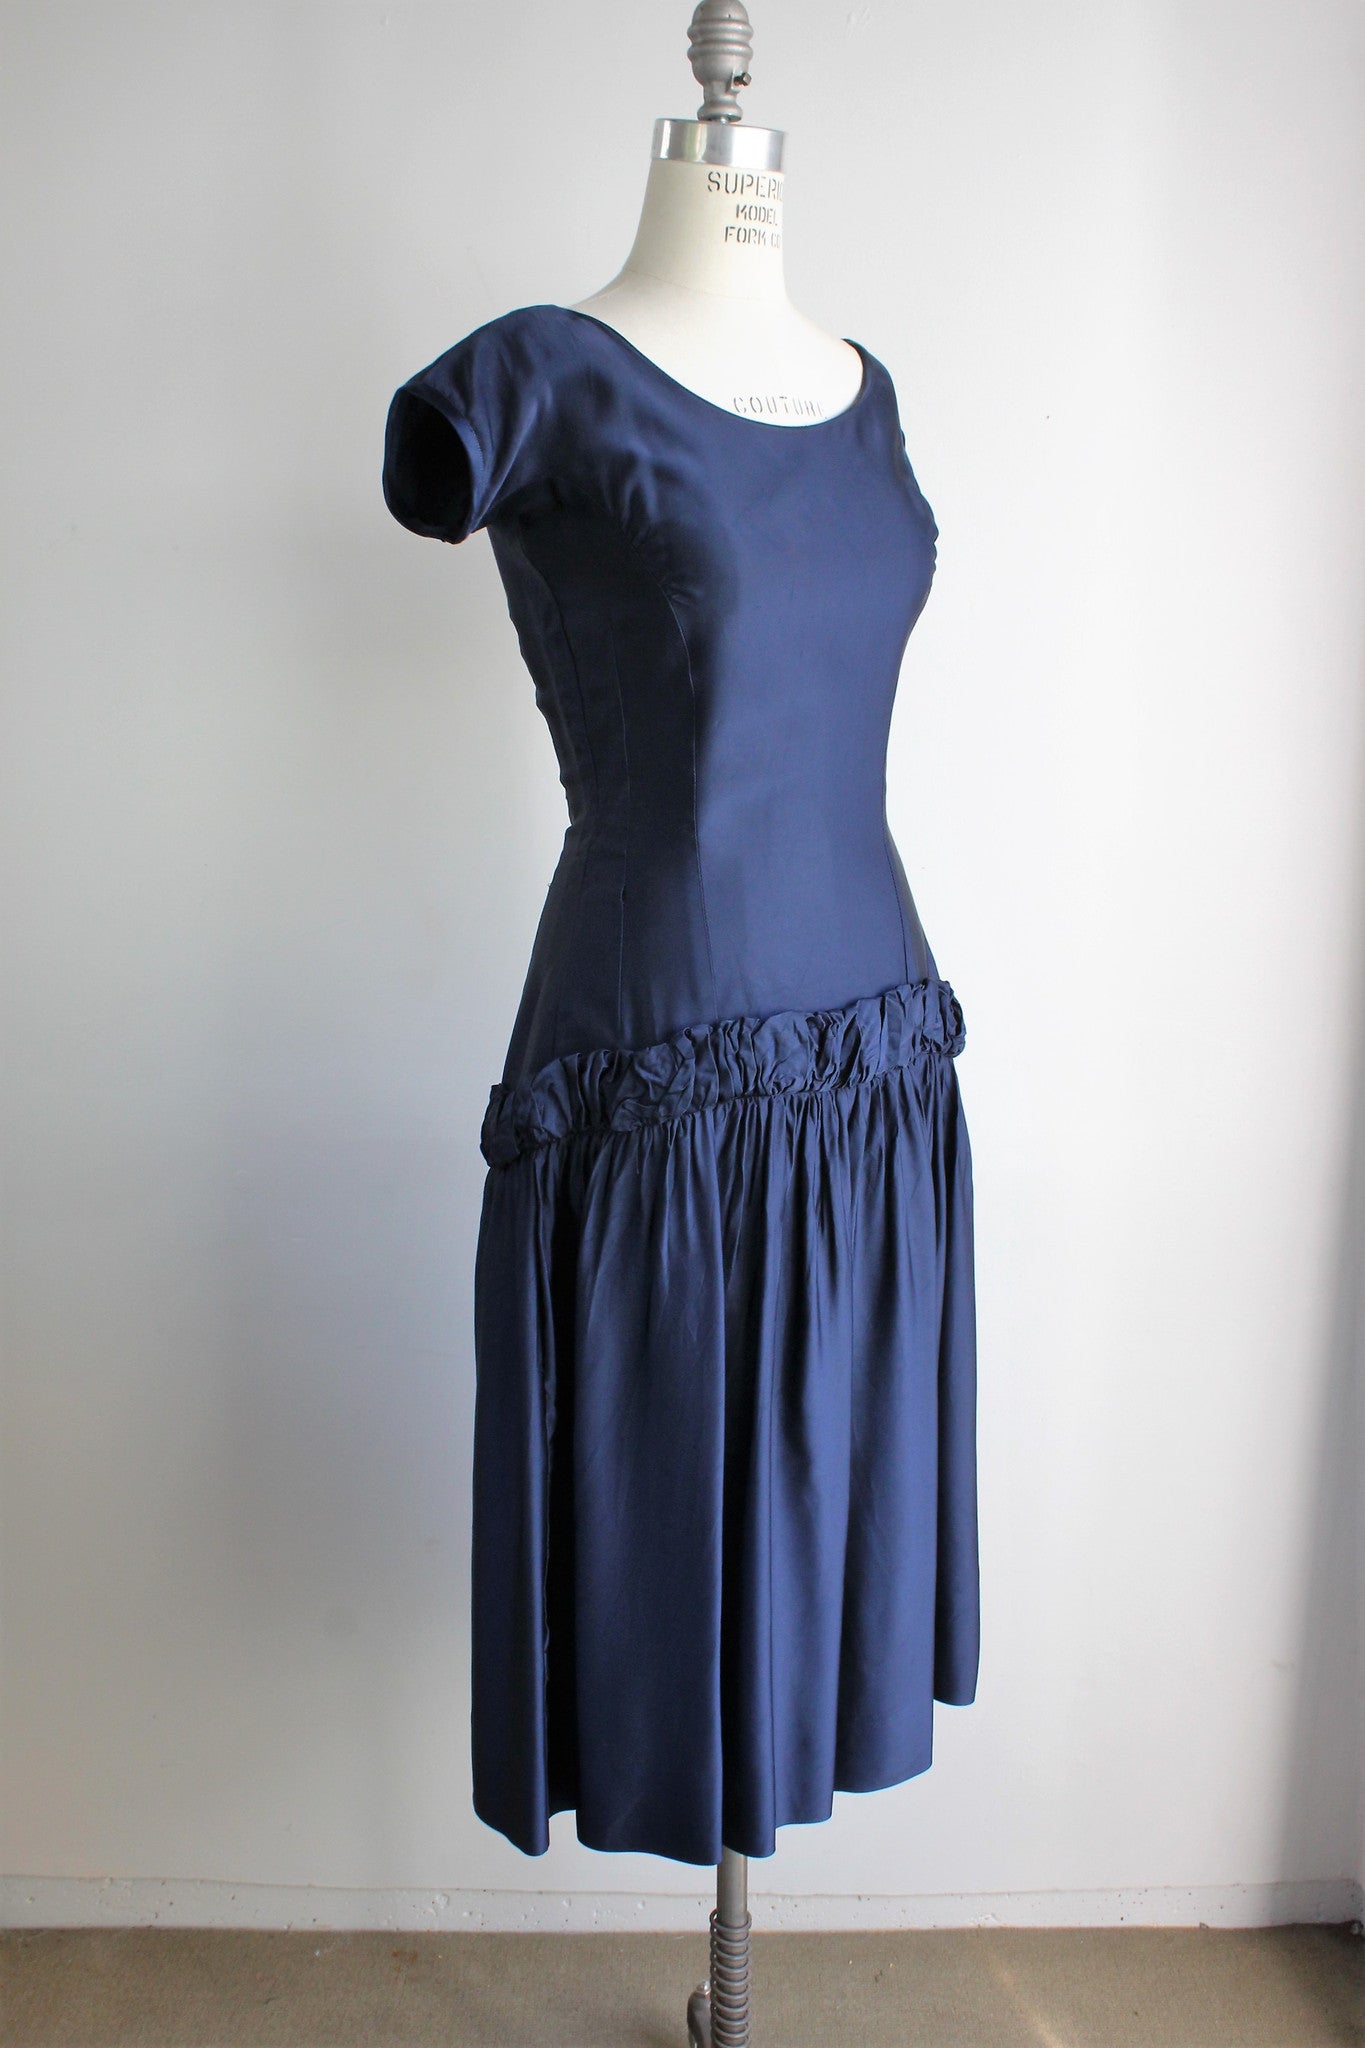 Vintage 1950s Navy Blue Party Dress / New Look Satin